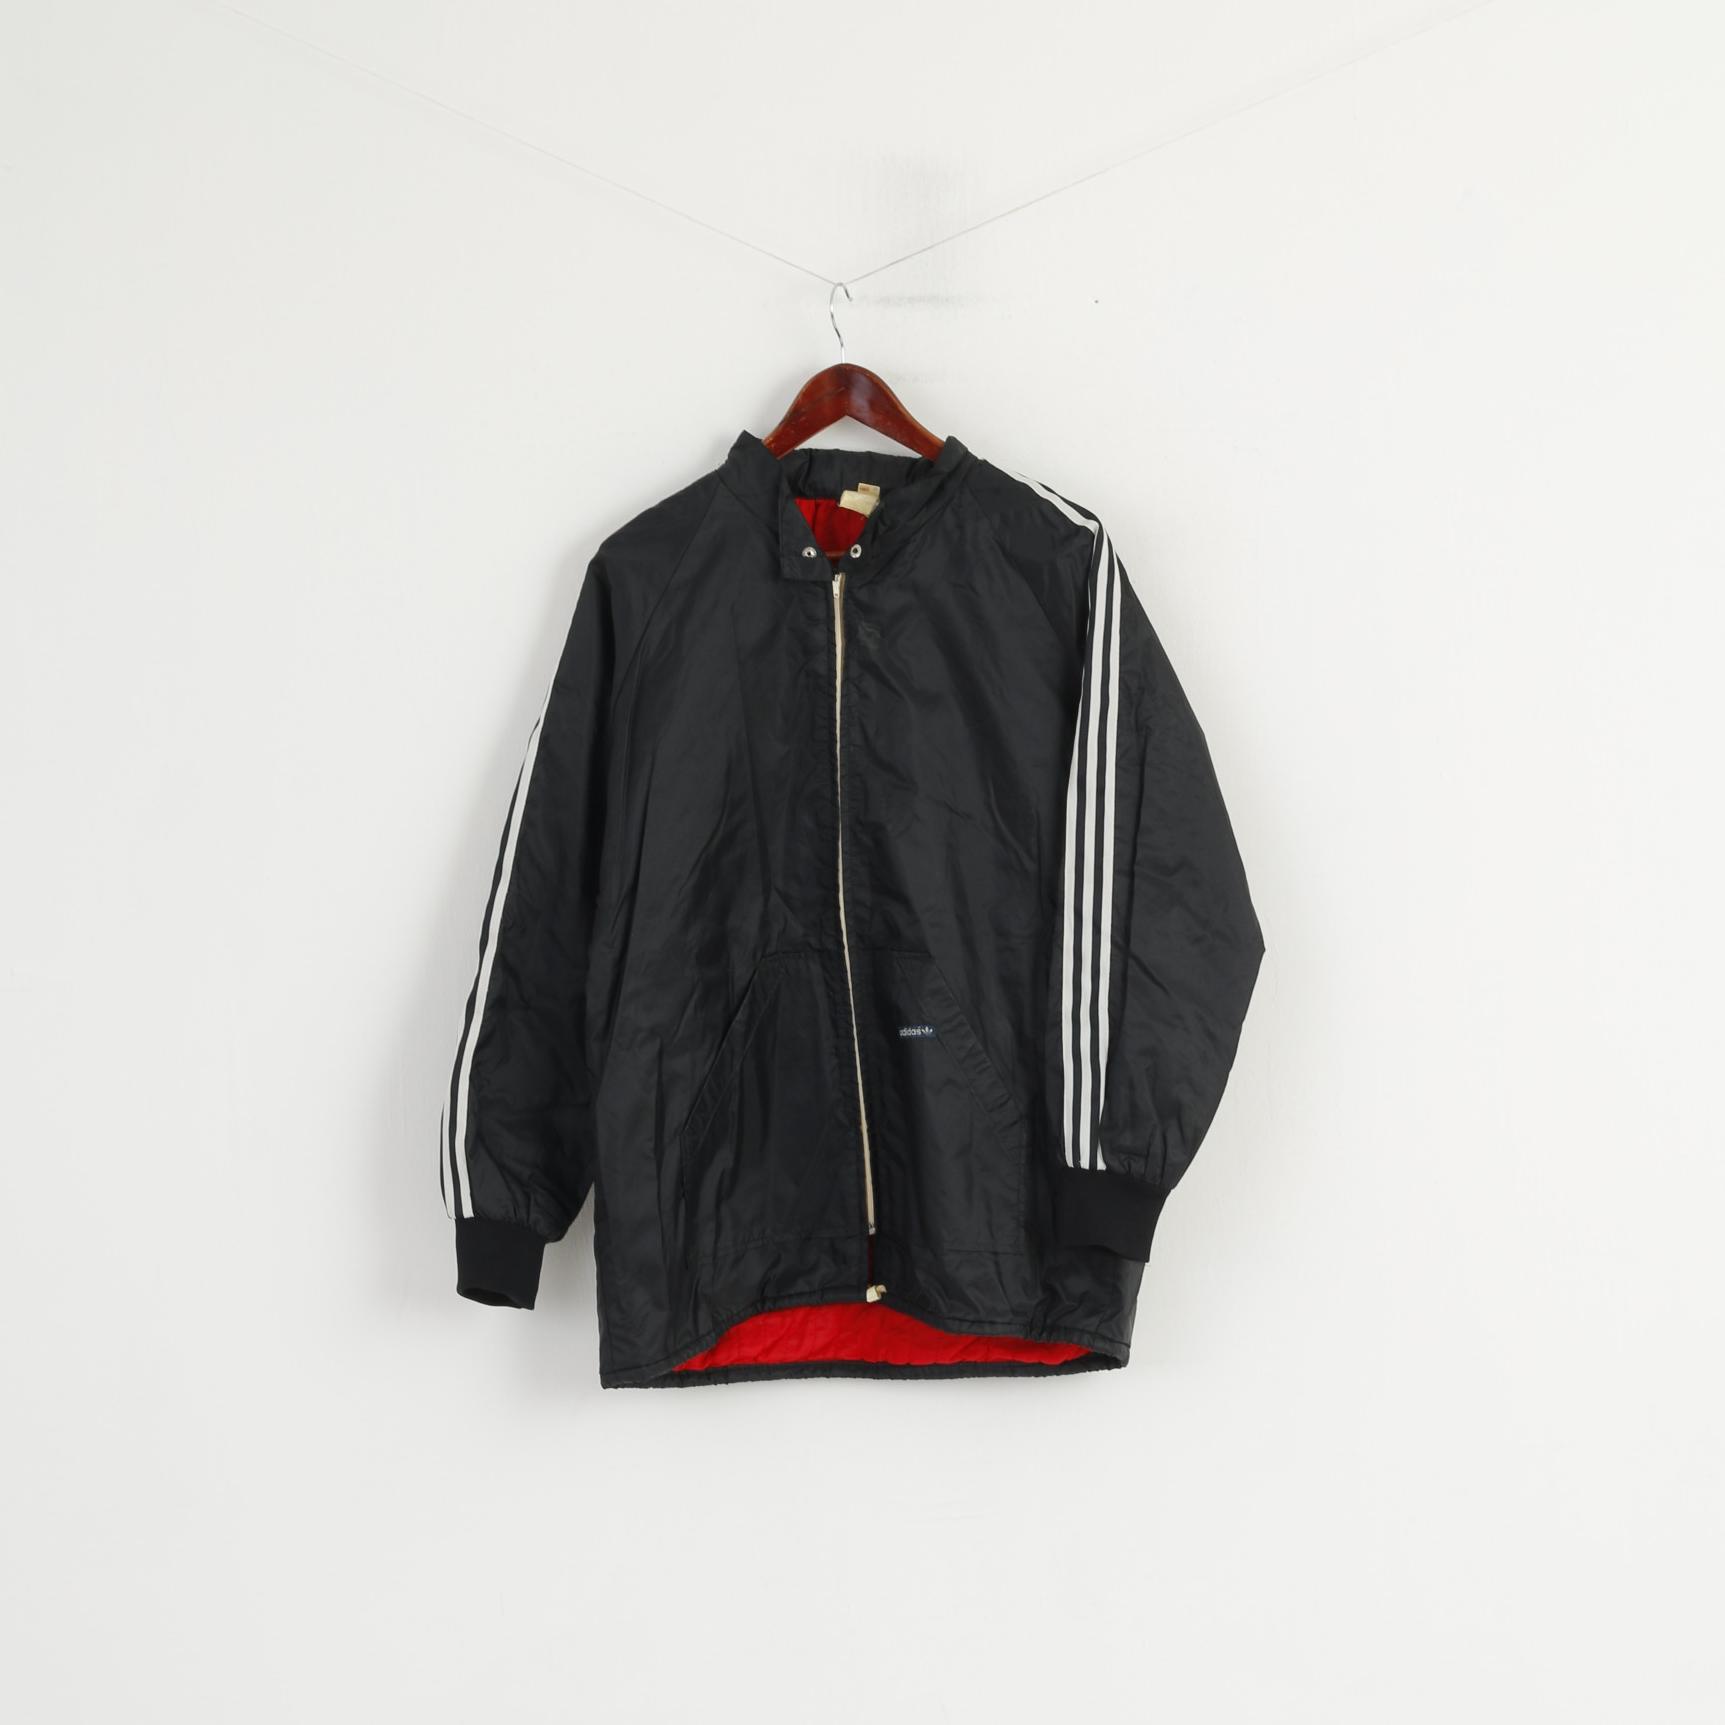 Adidas Men M Jacket Vintage 80s Black Nylon Full Zipper Hidden